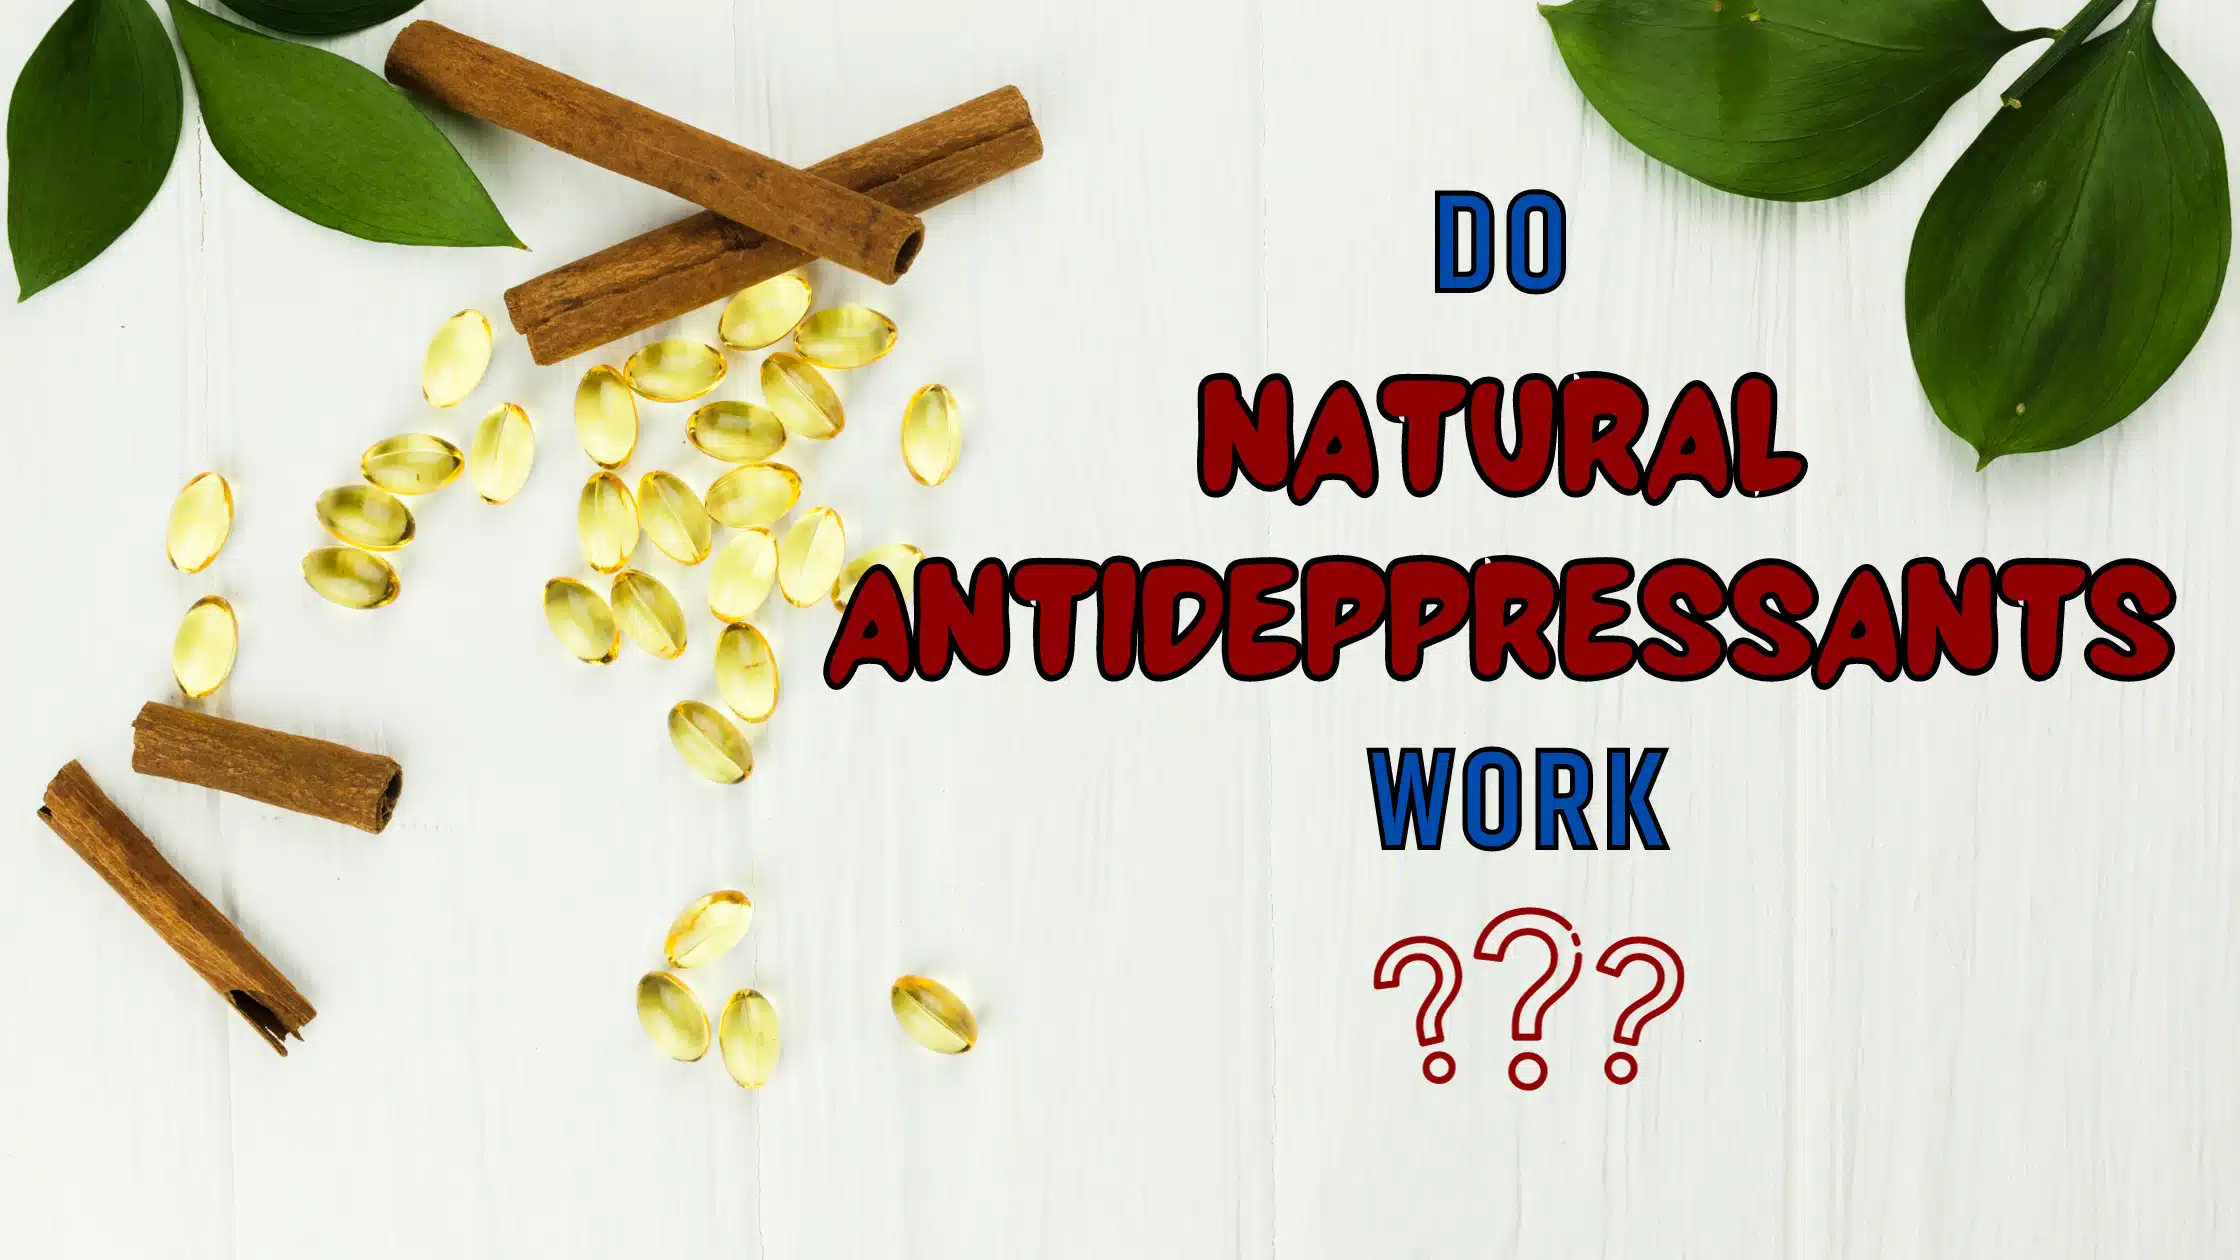 Do natural antidepressants work?